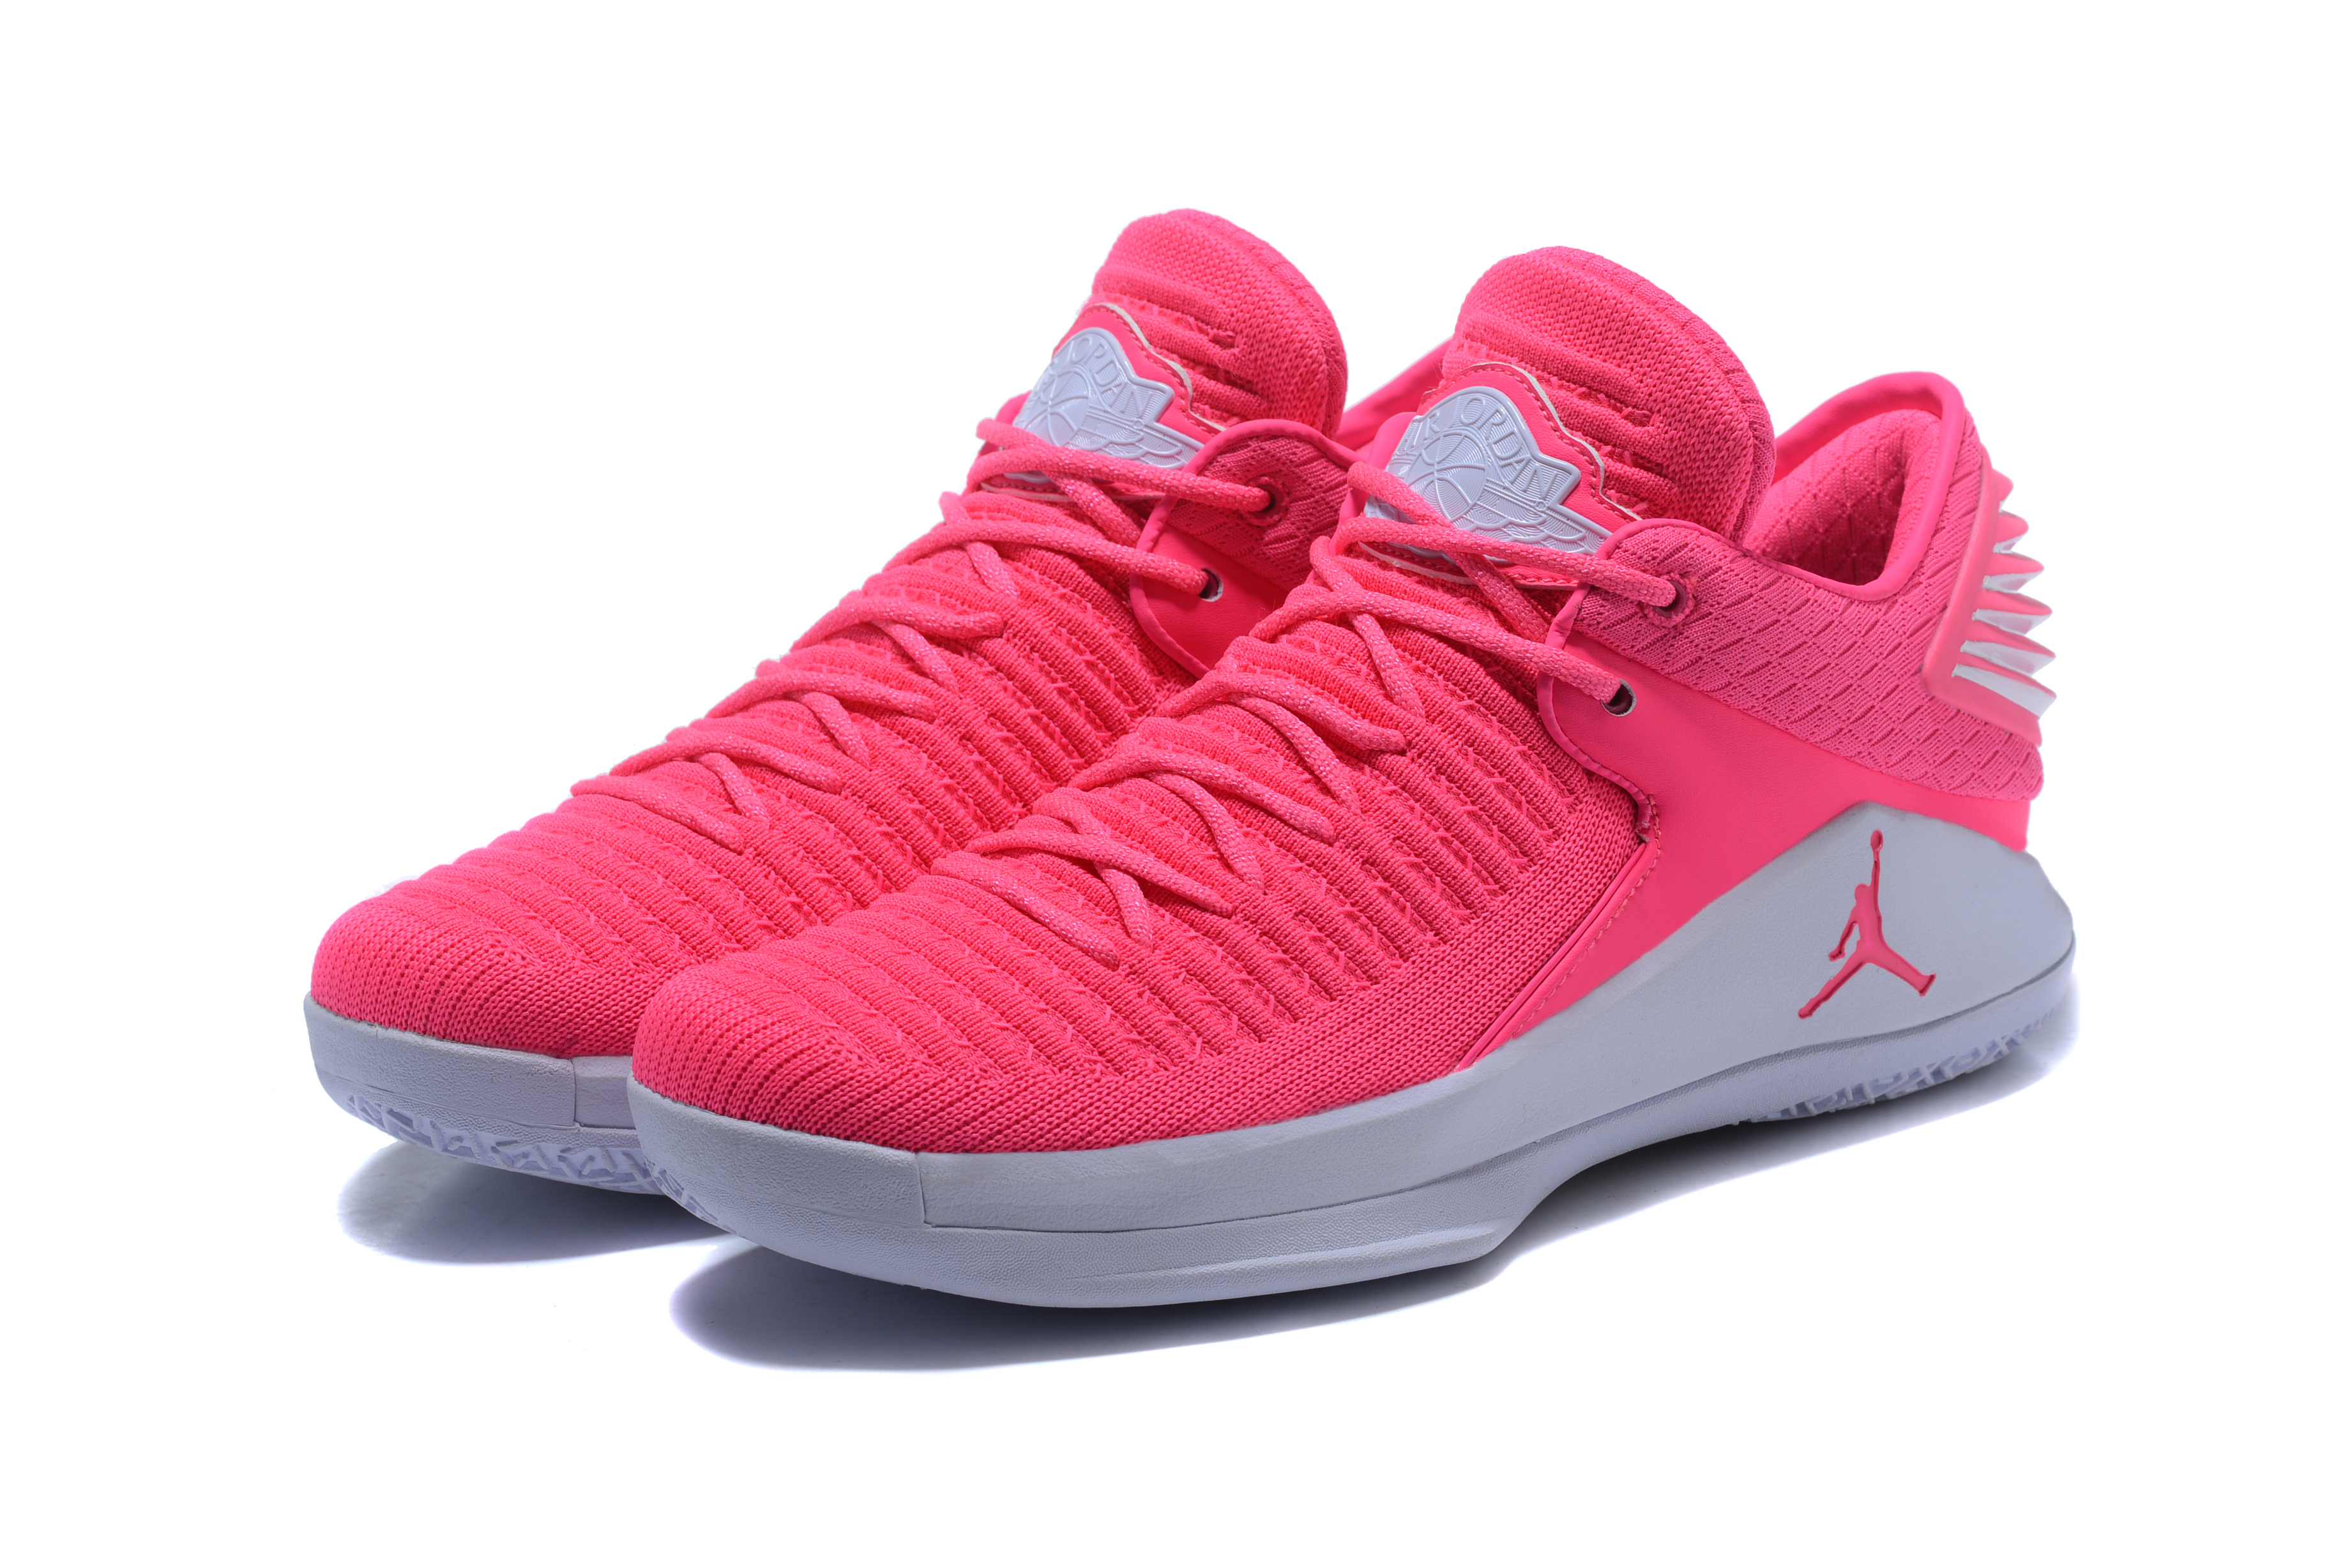 New Men Air Jordan XXXII Pink White Shoes